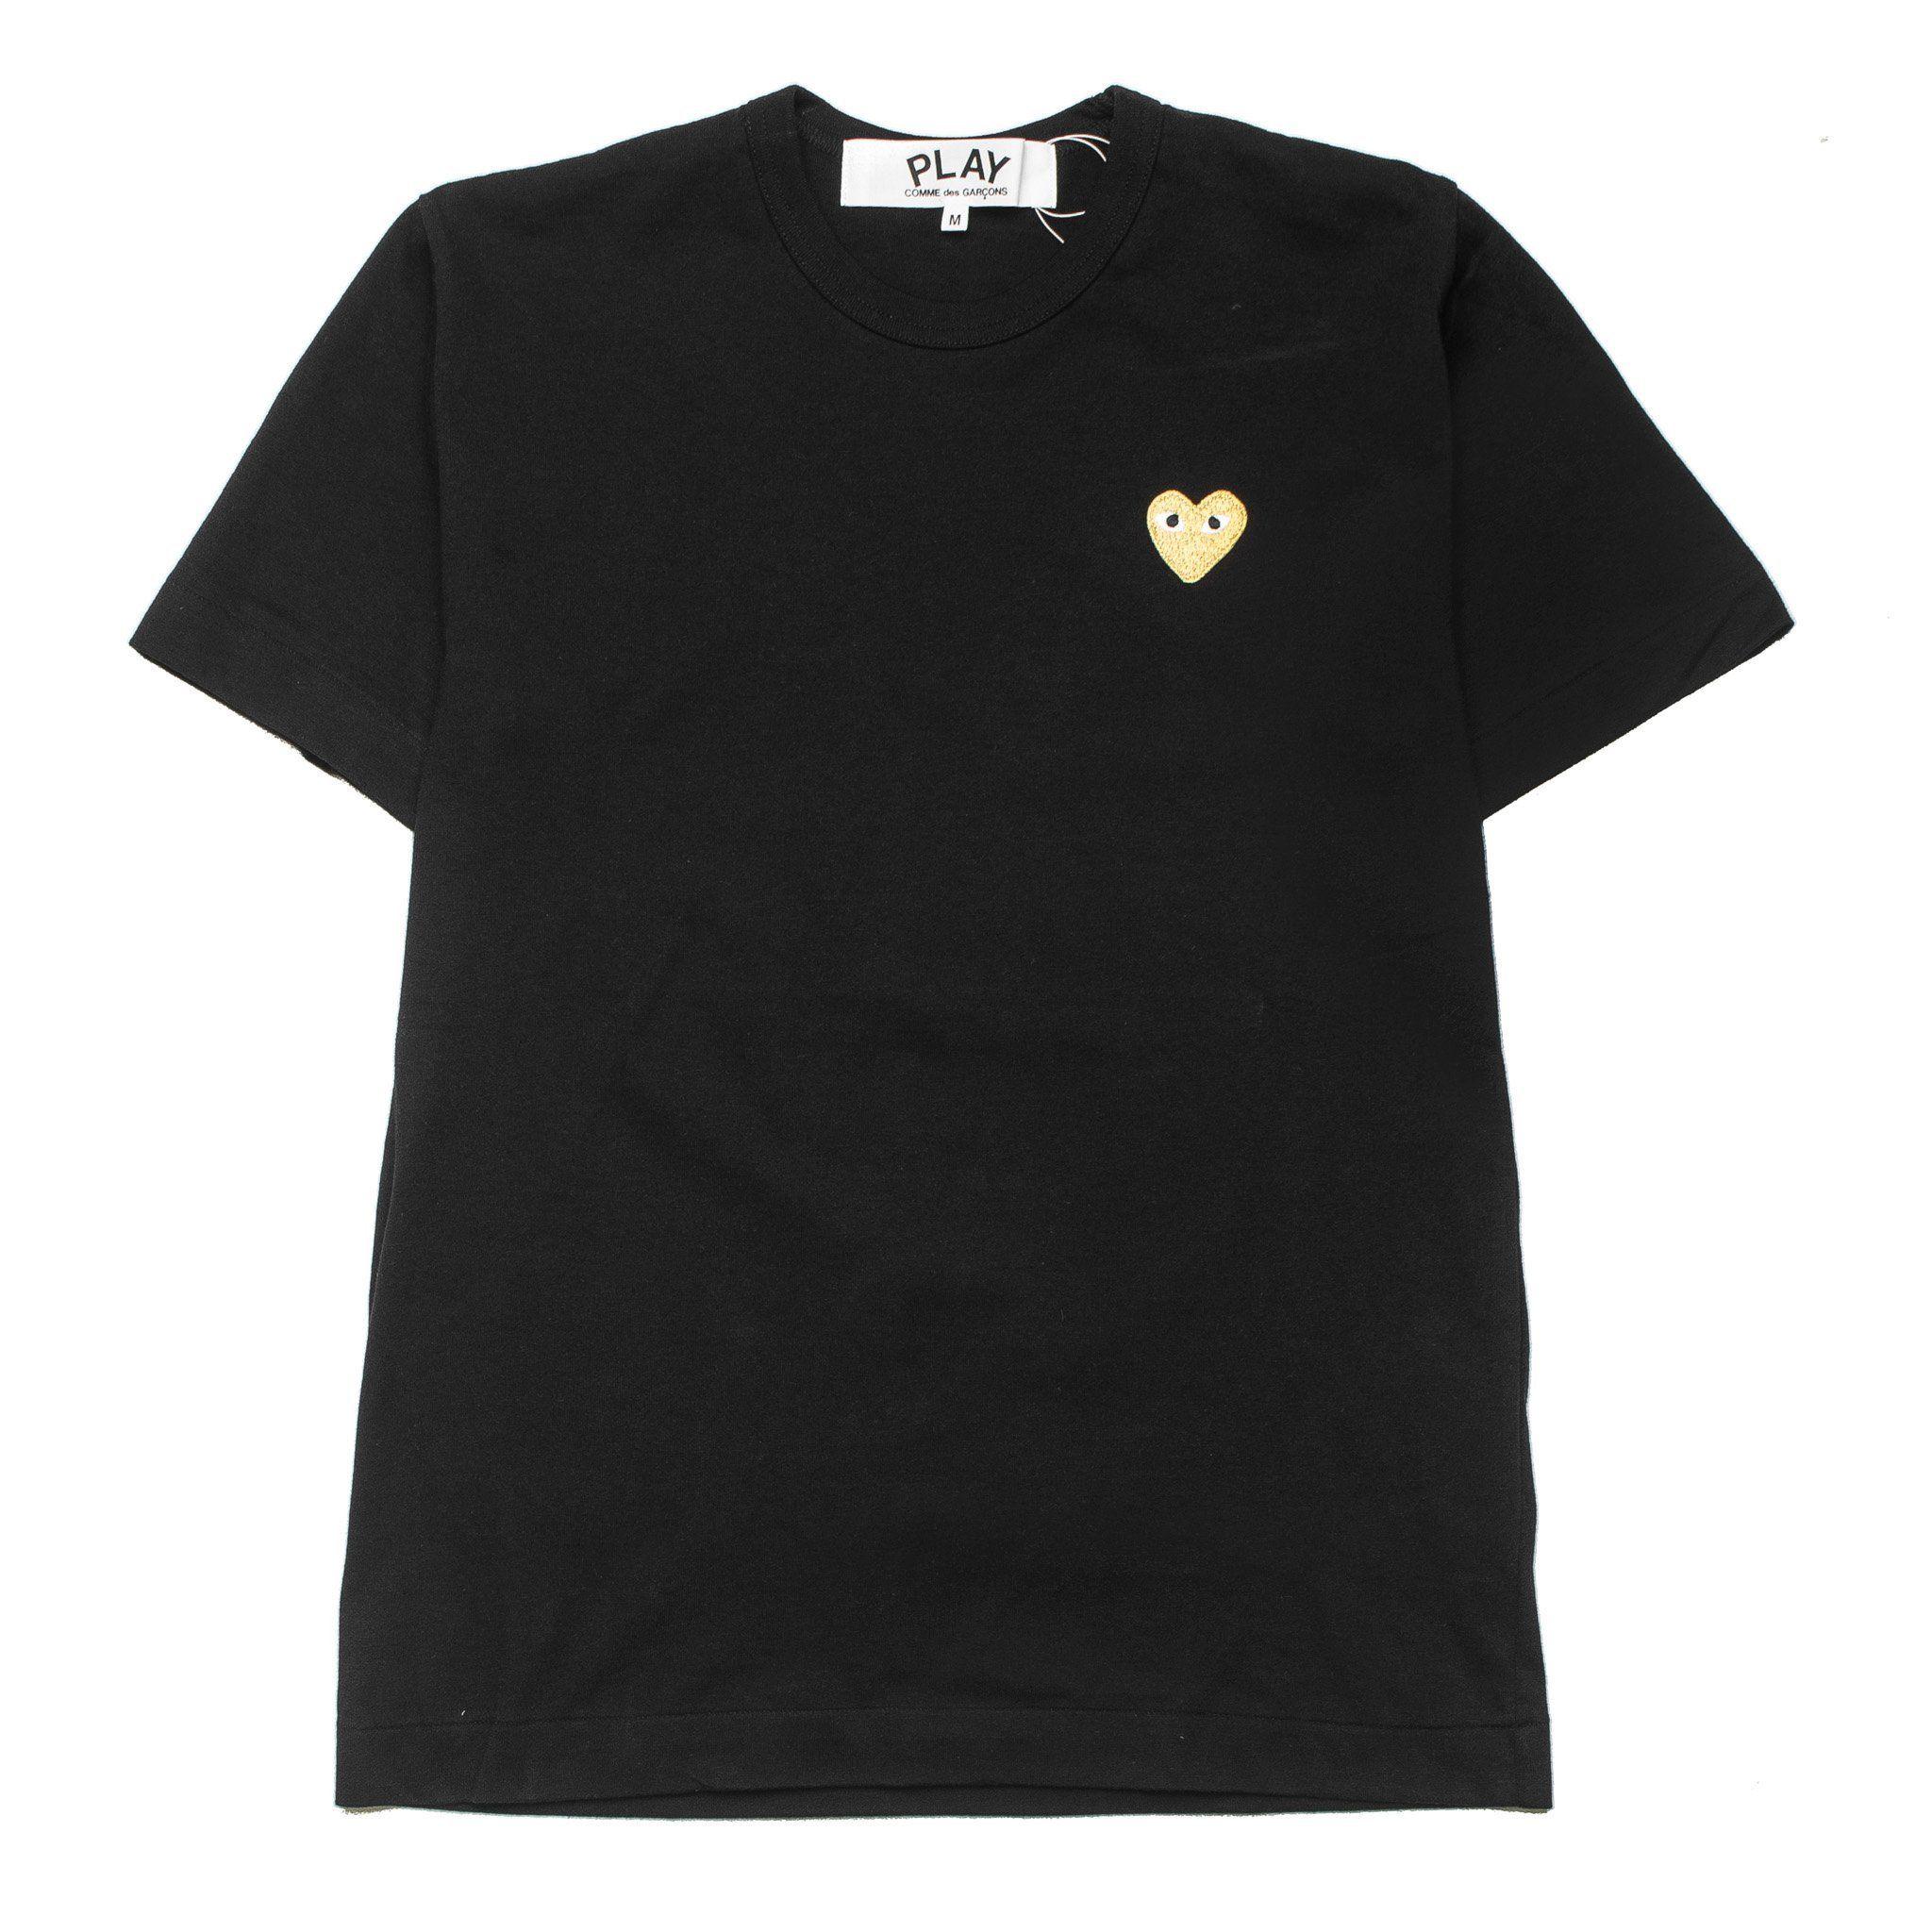 Gold Heart Logo - HEART LOGO GOLD AZ T216 051 1 Tee Black